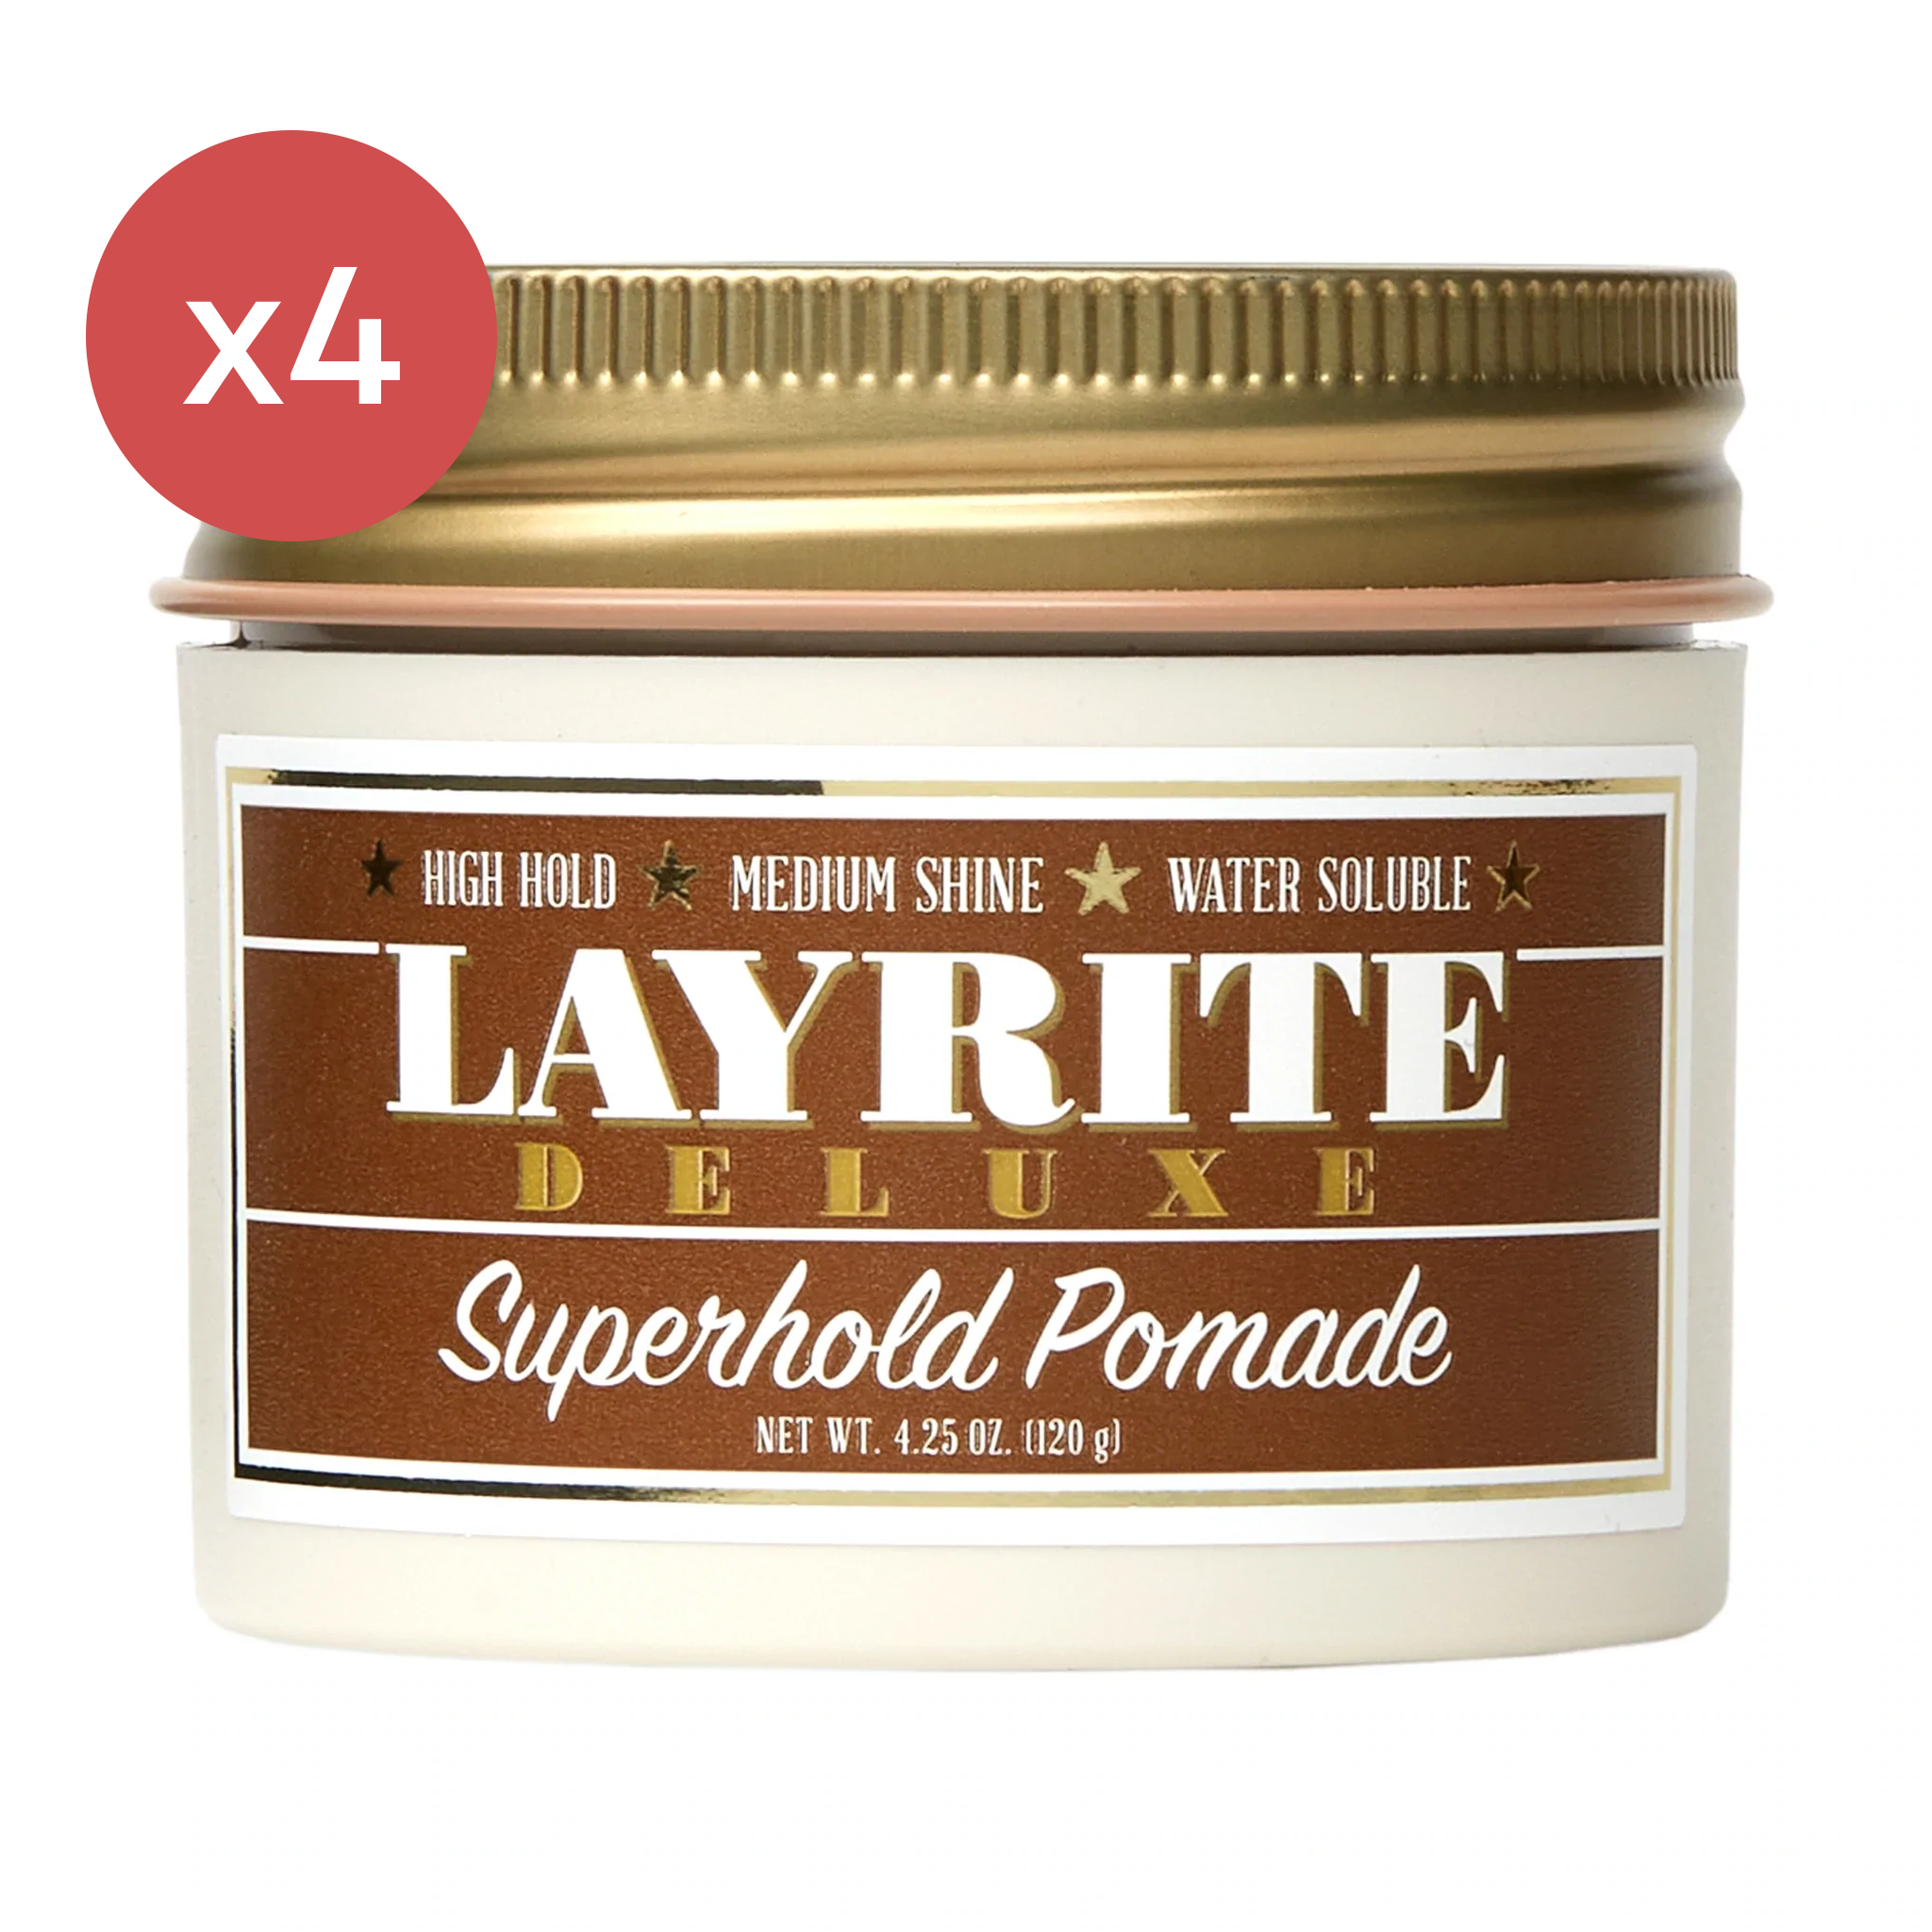 Layrite Superhold Pomade Quad